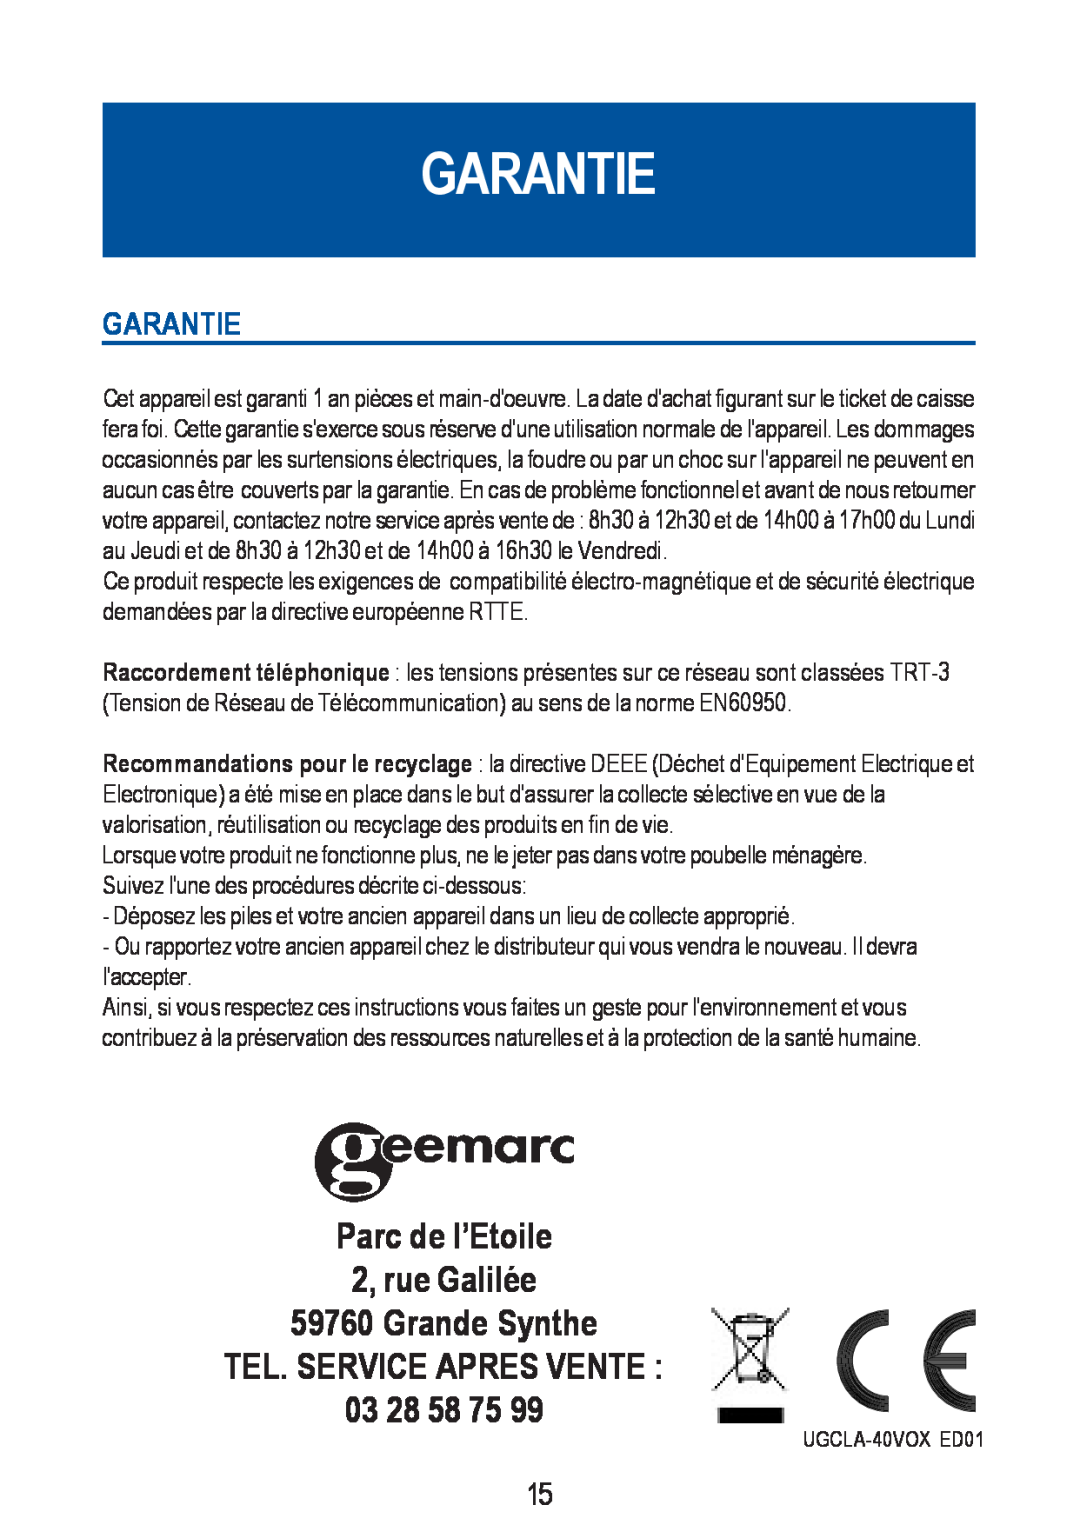 Geemarc CLA-40 VOX manual Garantie, Parc de l’Etoile 2, rue Galilée, Grande Synthe TEL. SERVICE APRES VENTE 